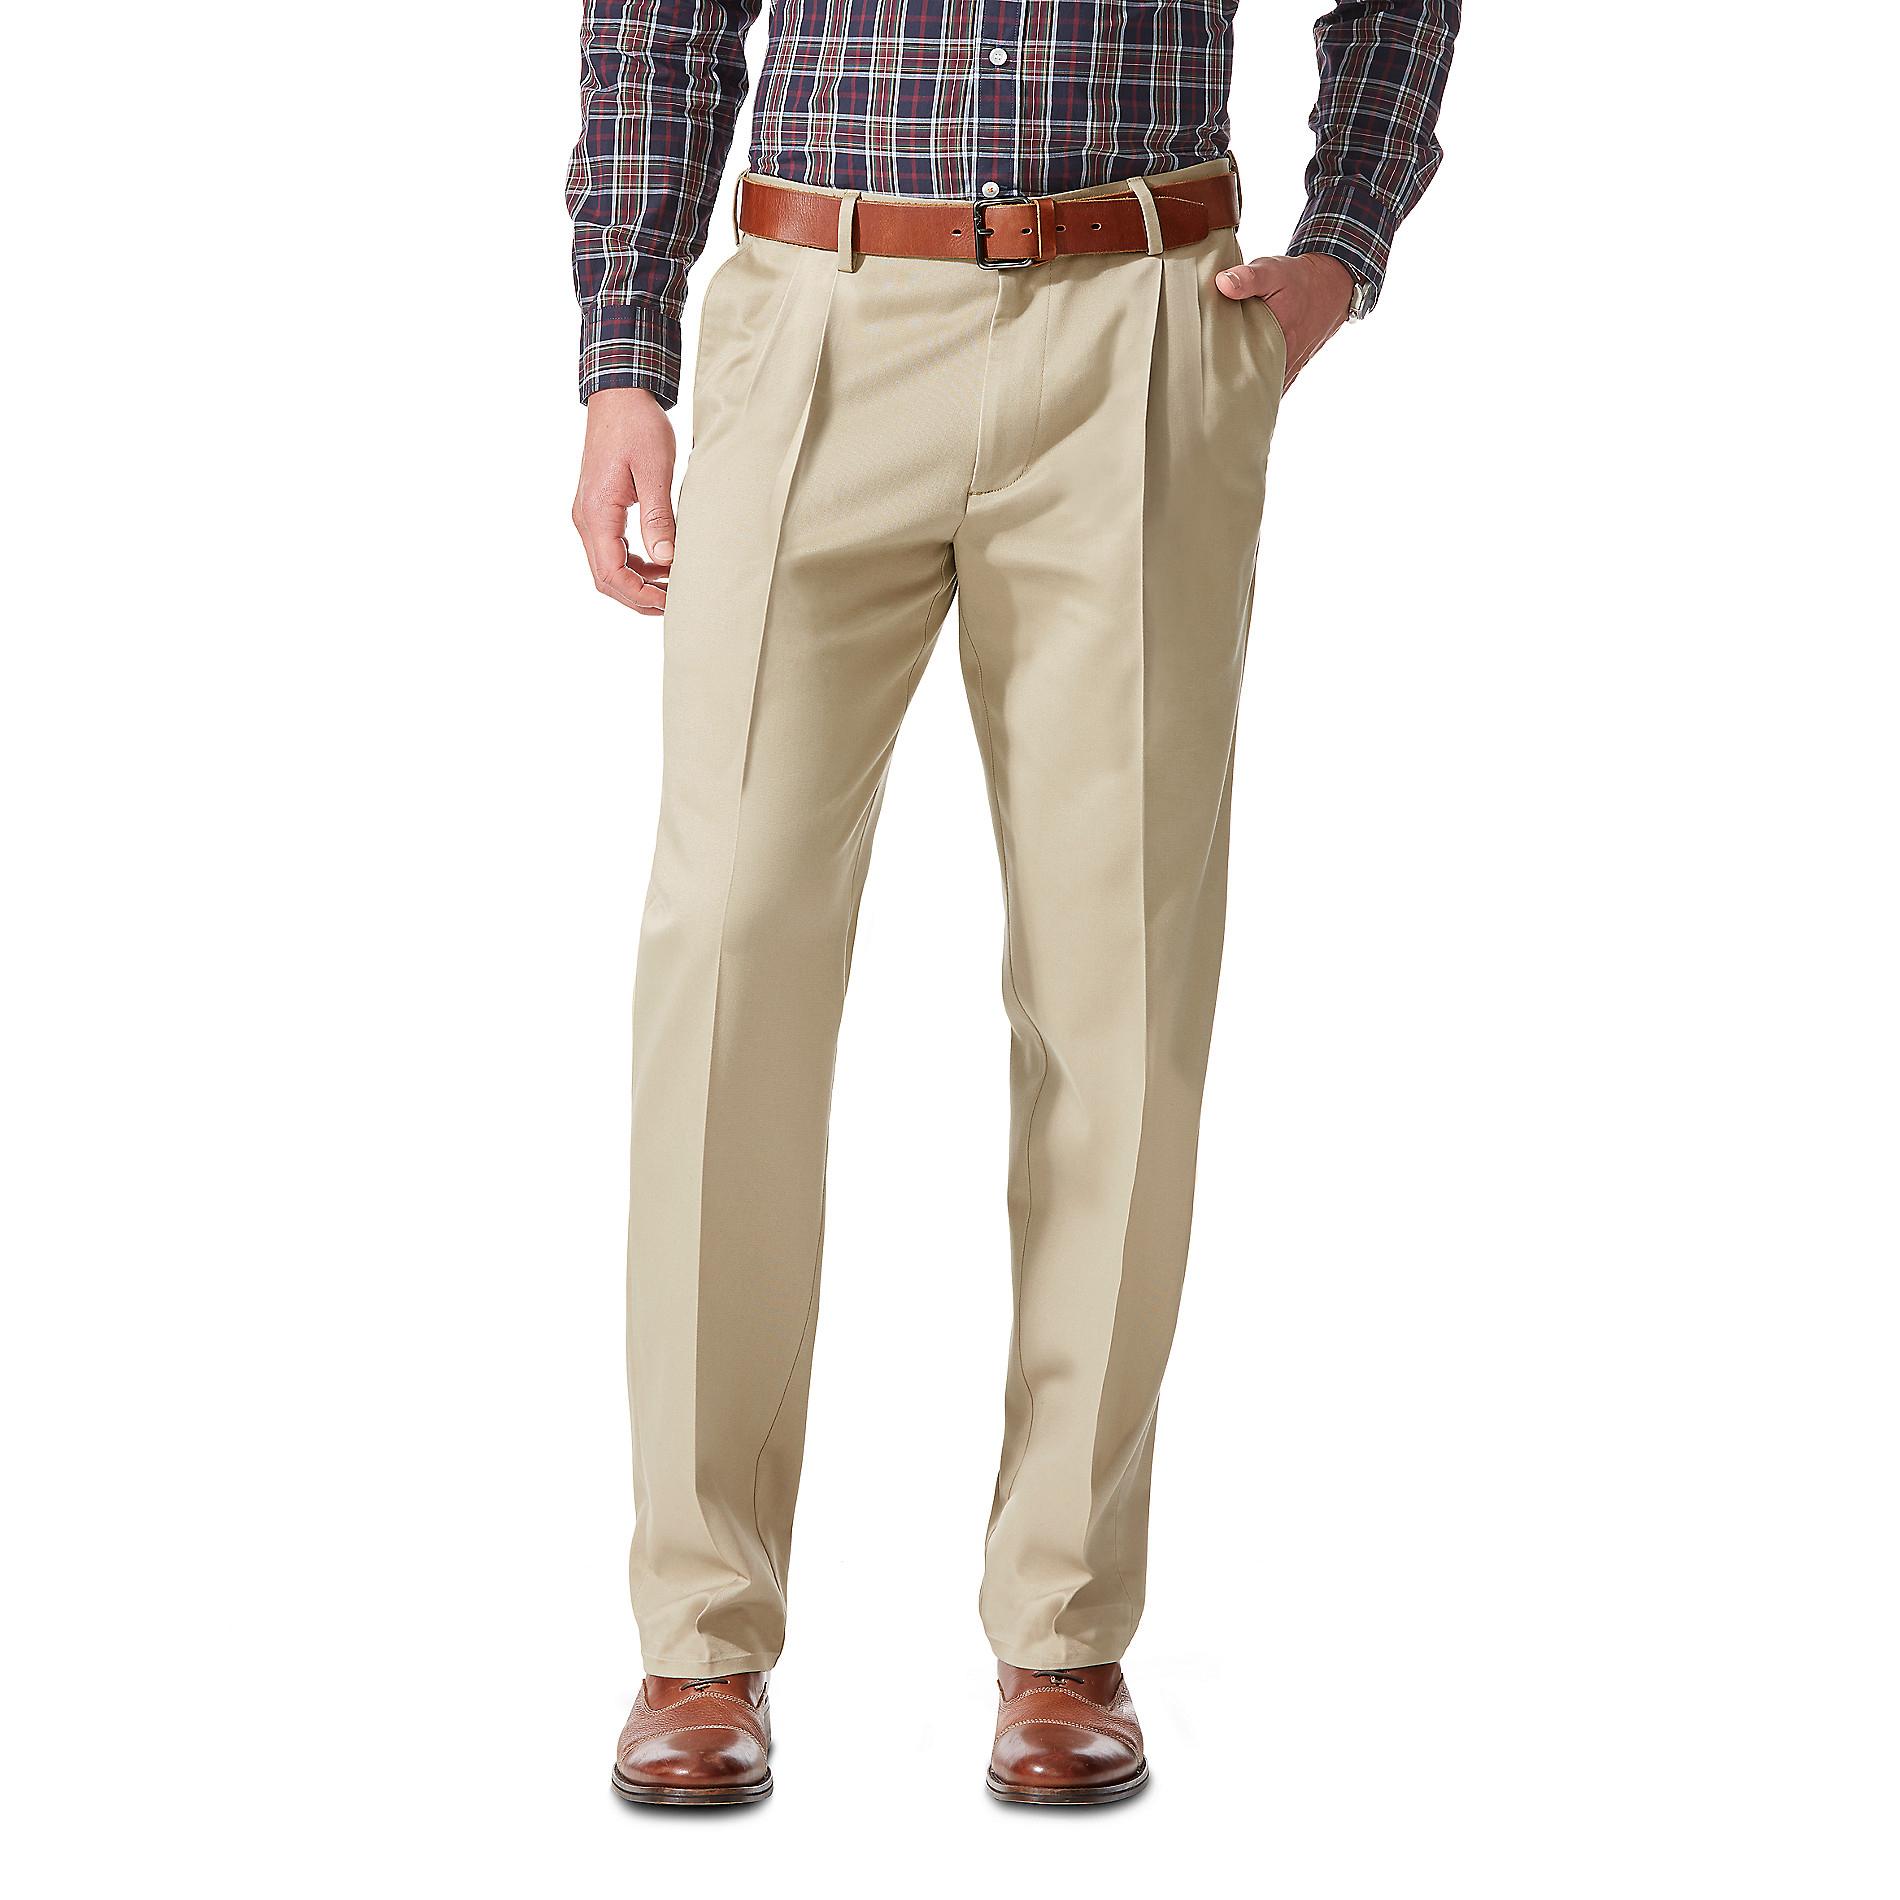 Dockers Men's Comfort Khaki Classic Fit Pants - Pleated D3